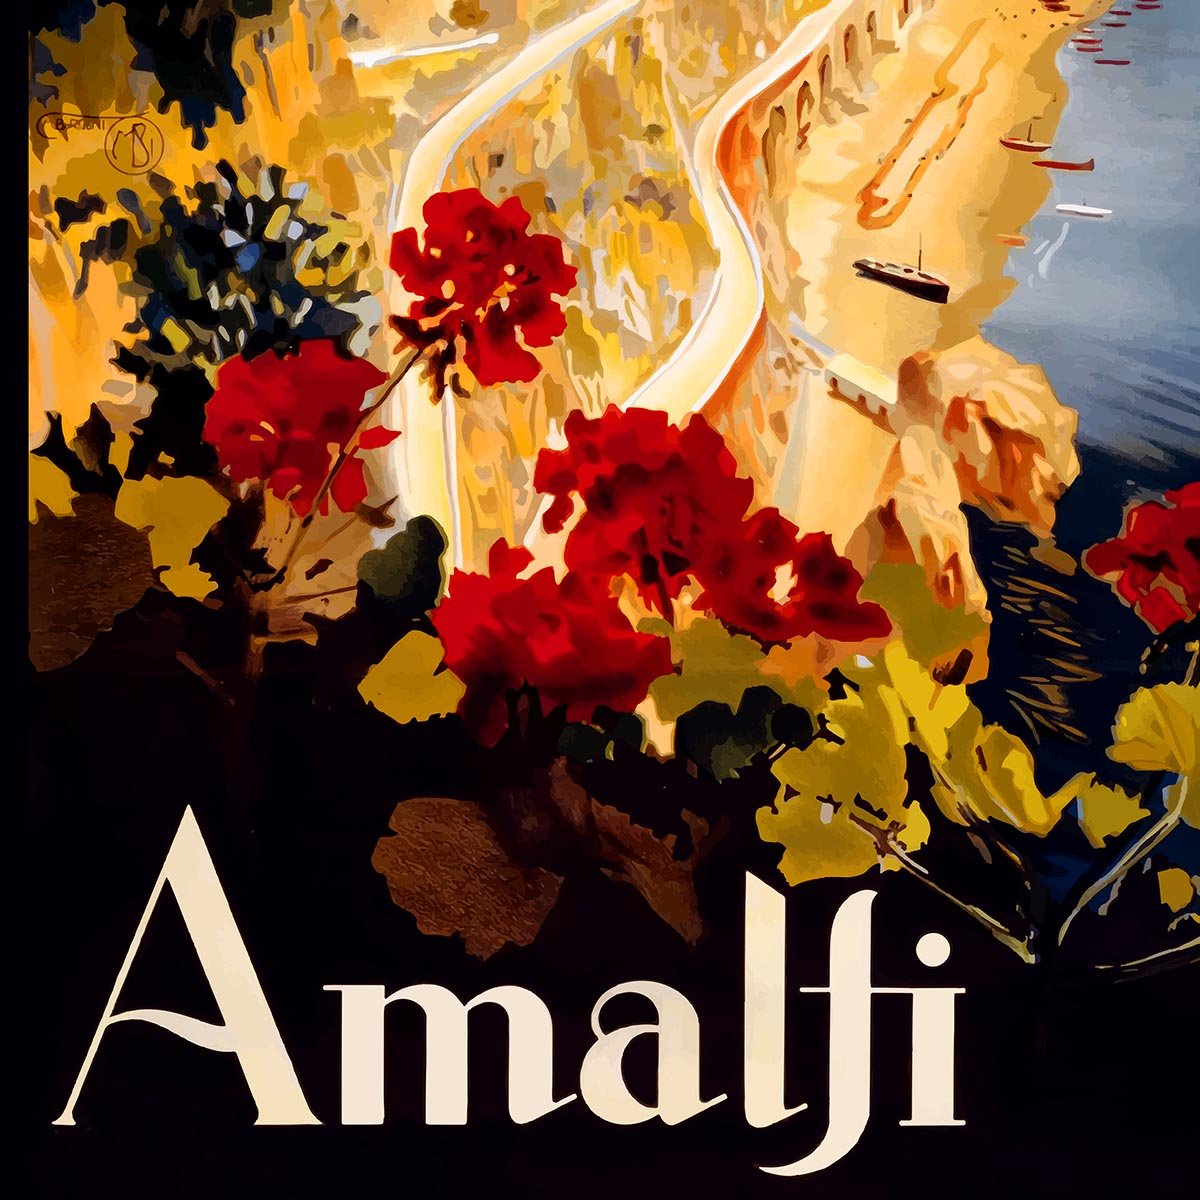 Amalfi Italy Travel Poster